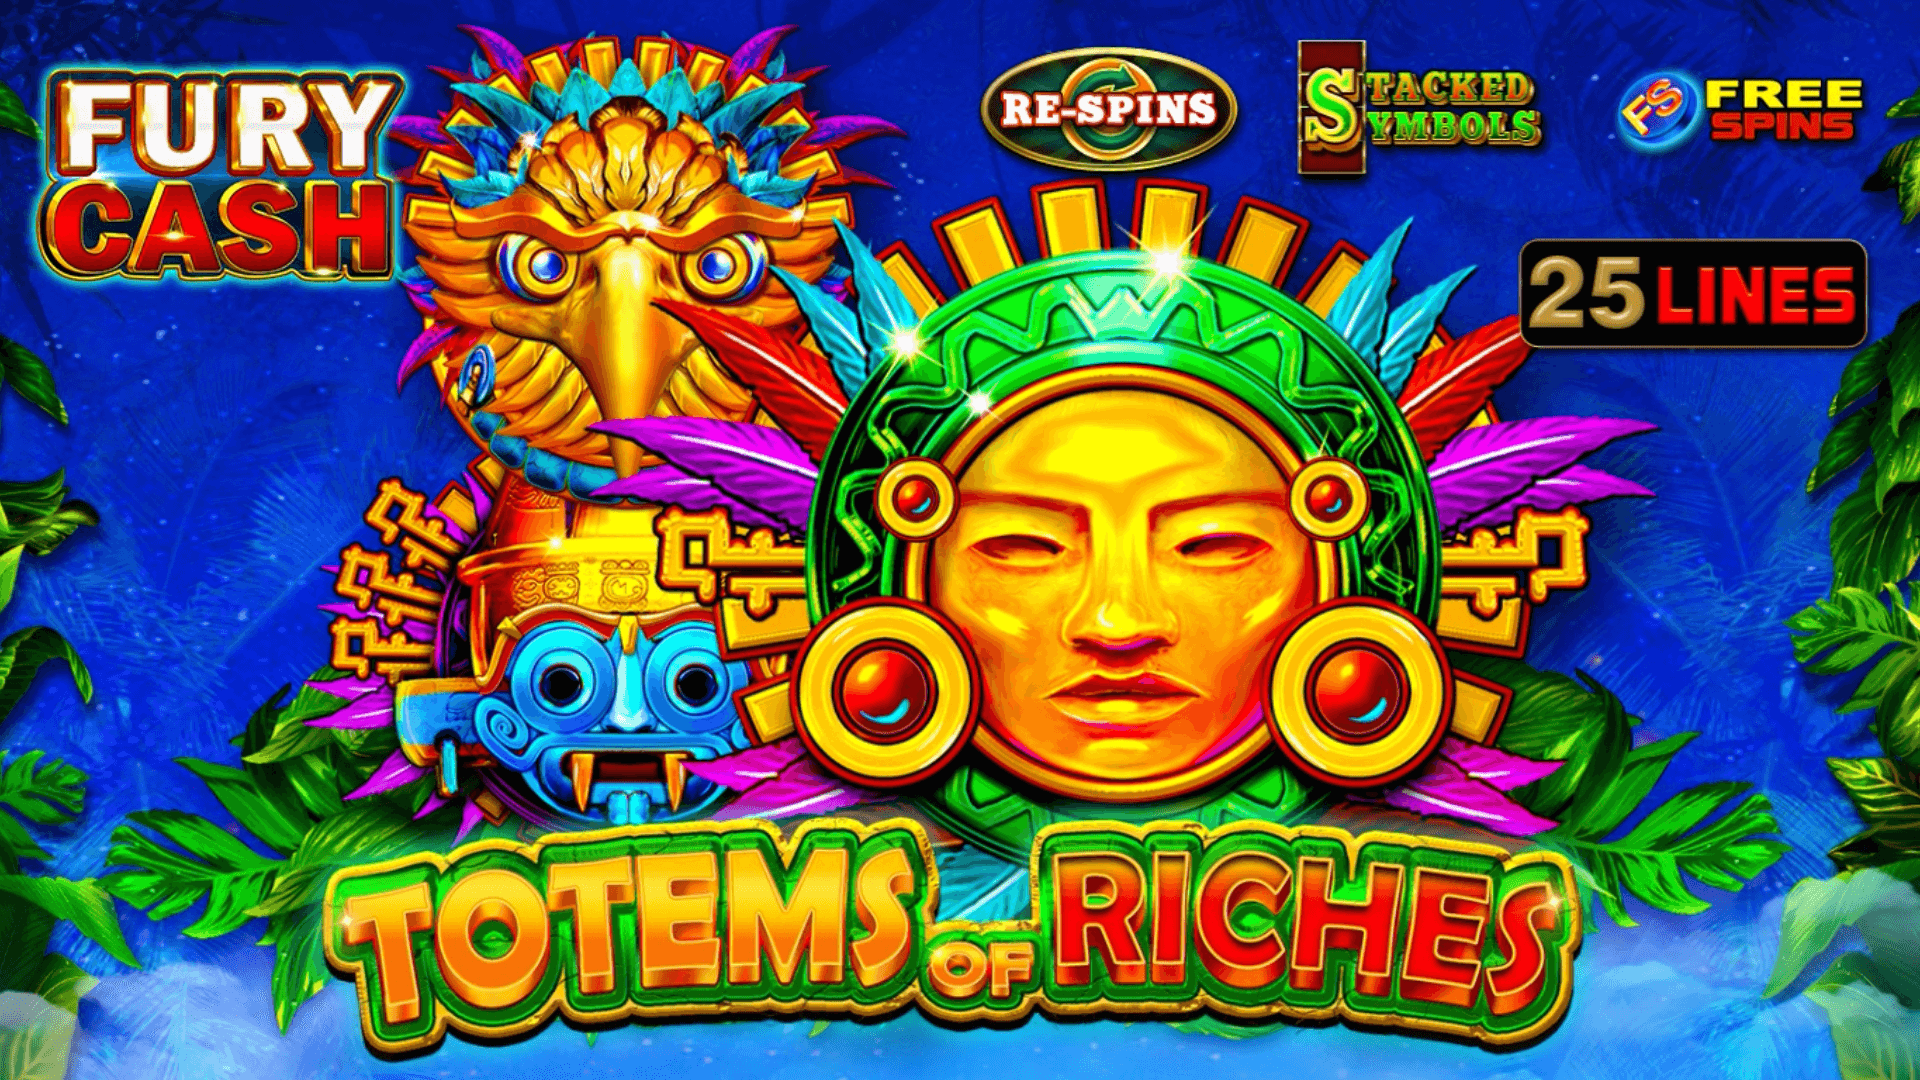 egt games general series bonus prize general totems of riches fury cash 2